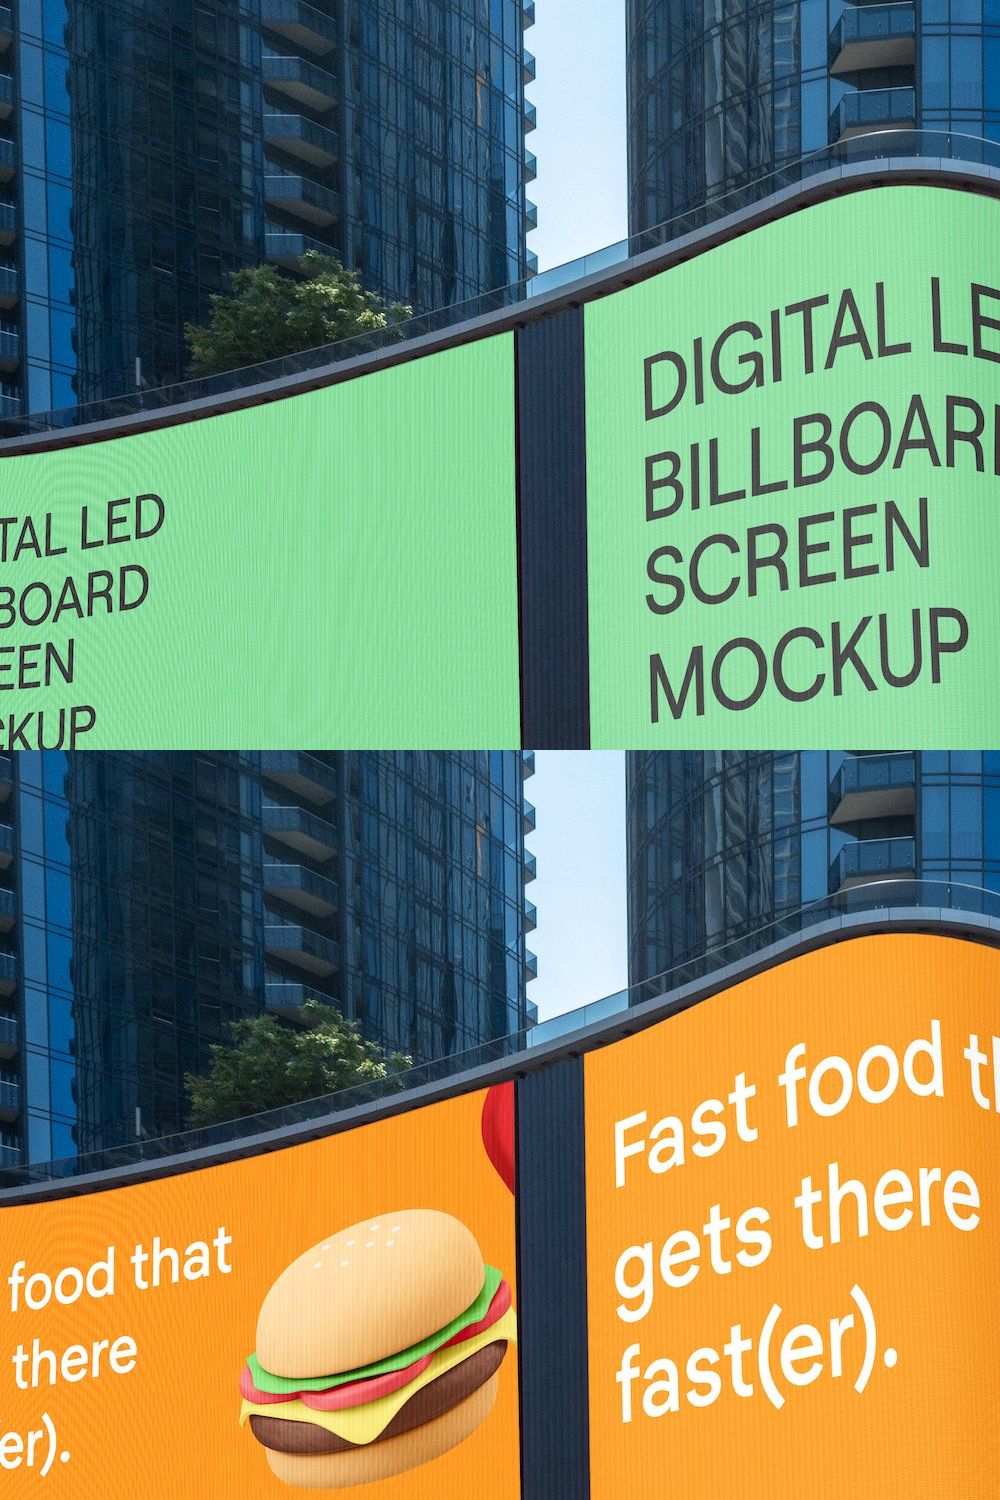 Big Screen City Billboard Mockup PSD pinterest preview image.